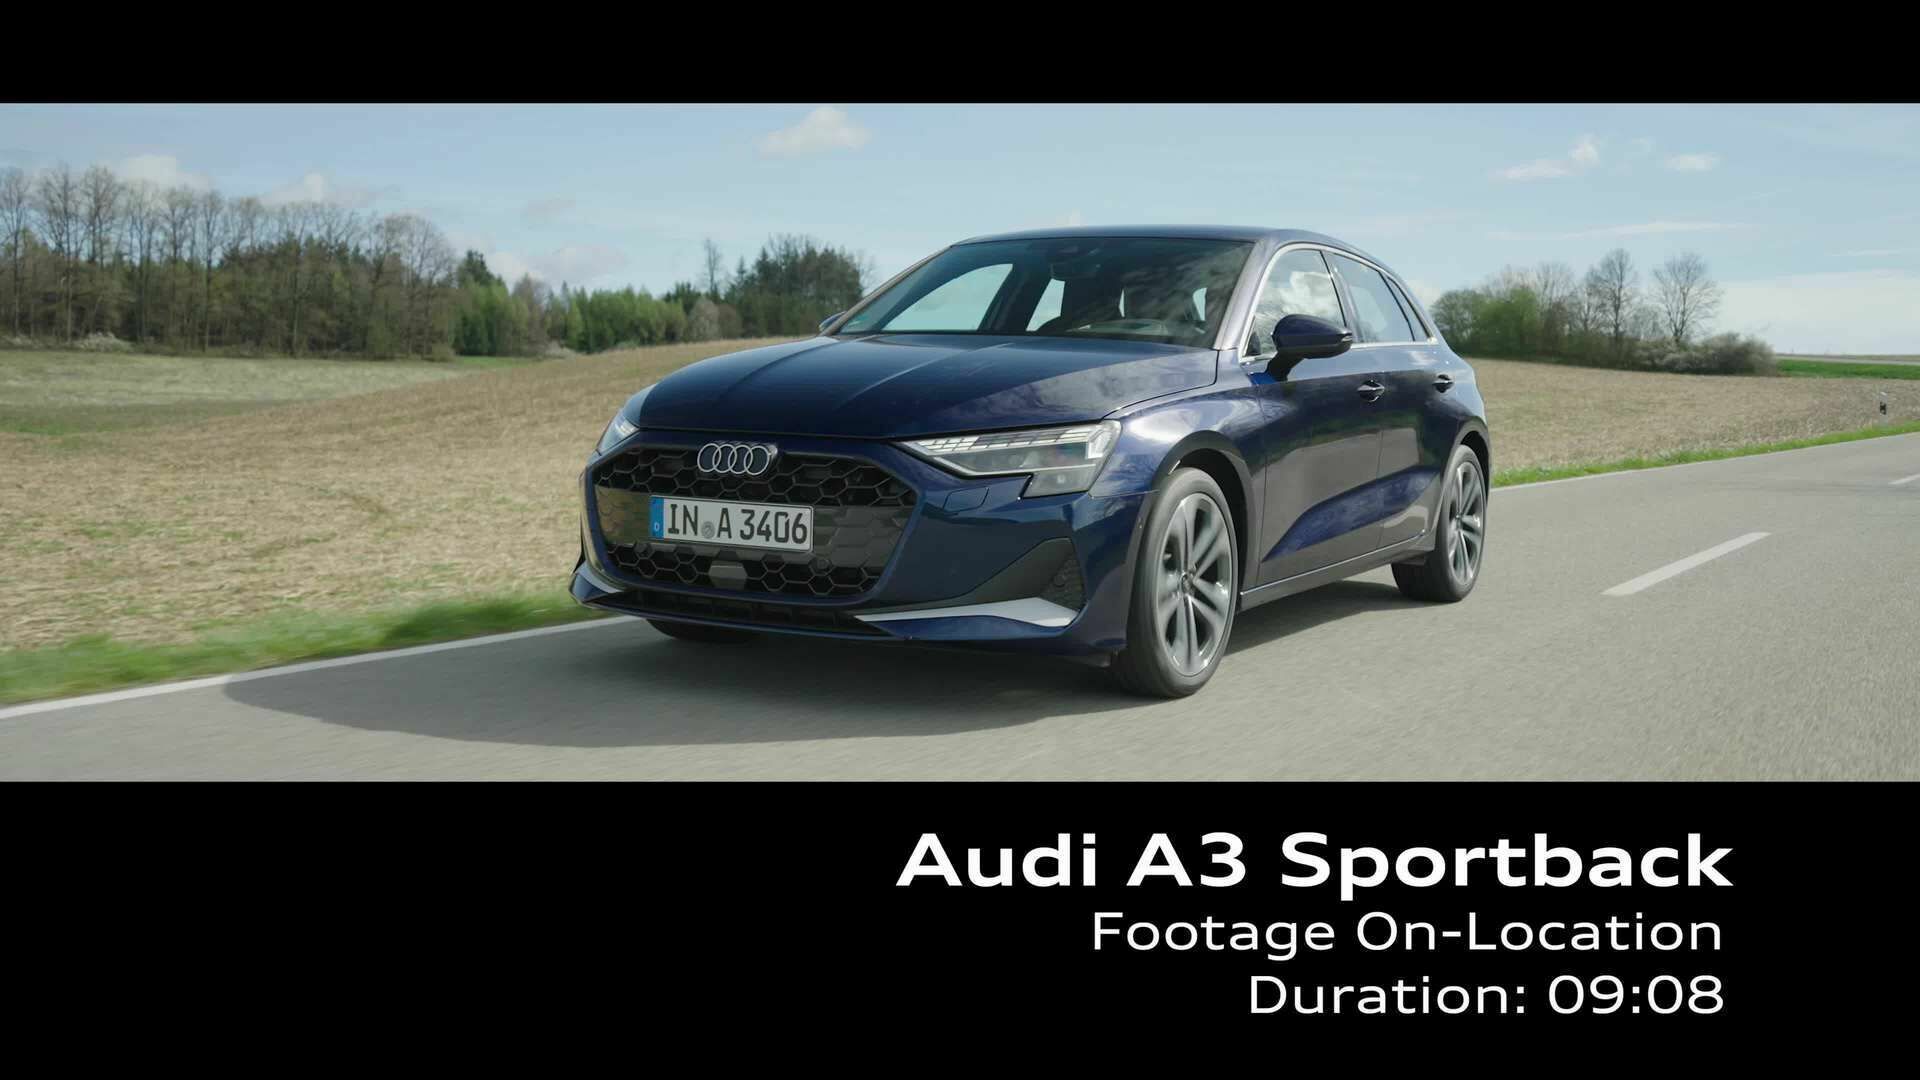 Audi A3 Sportback – Footage (on-Location)